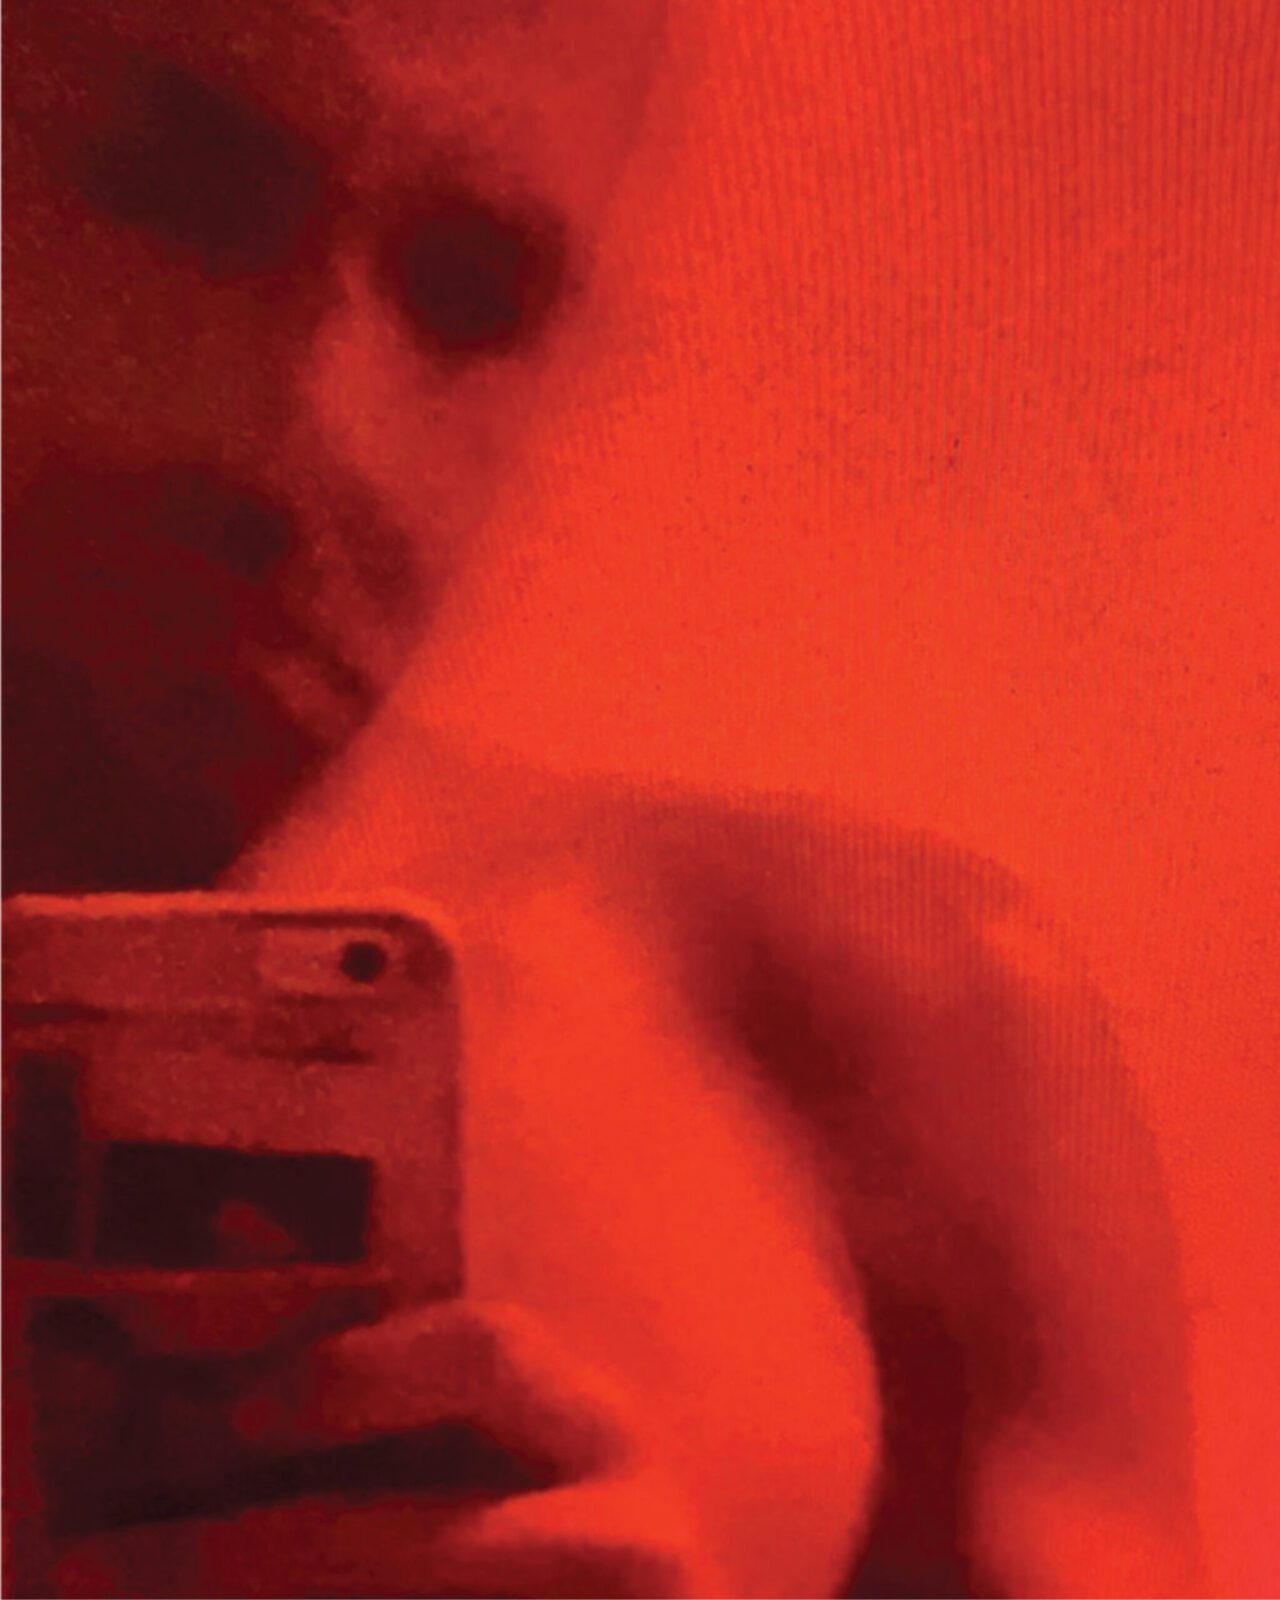 blurred selfie in red